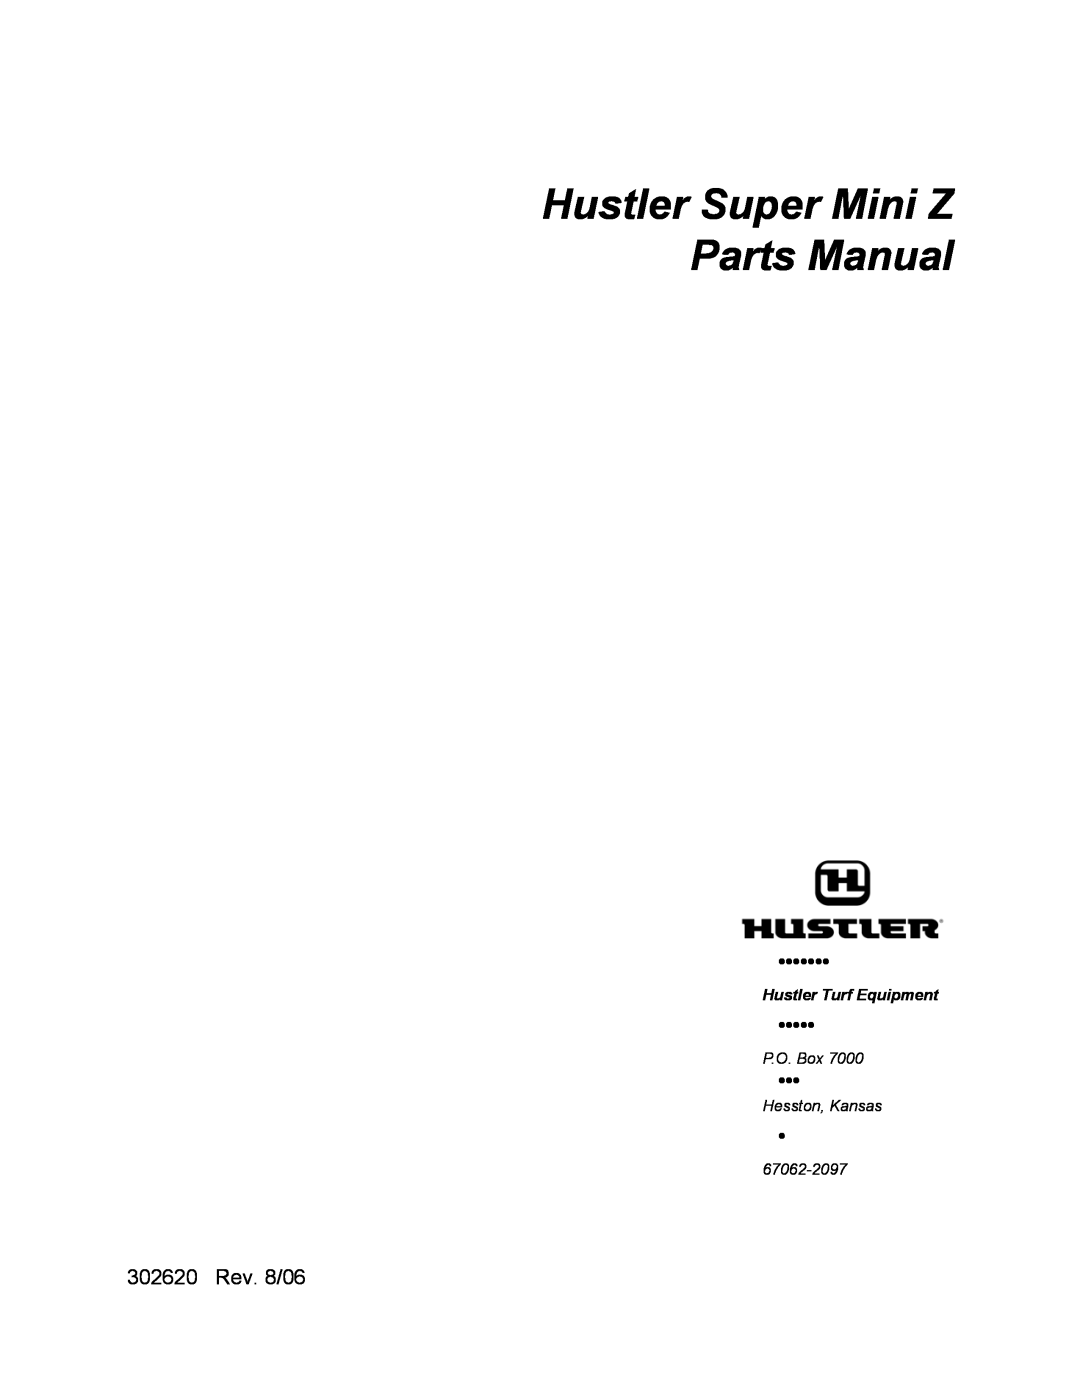 Hustler Turf manual 302620 Rev. 8/06, Hustler Super Mini Z Parts Manual, Hustler Turf Equipment, P.O. Box, 67062-2097 